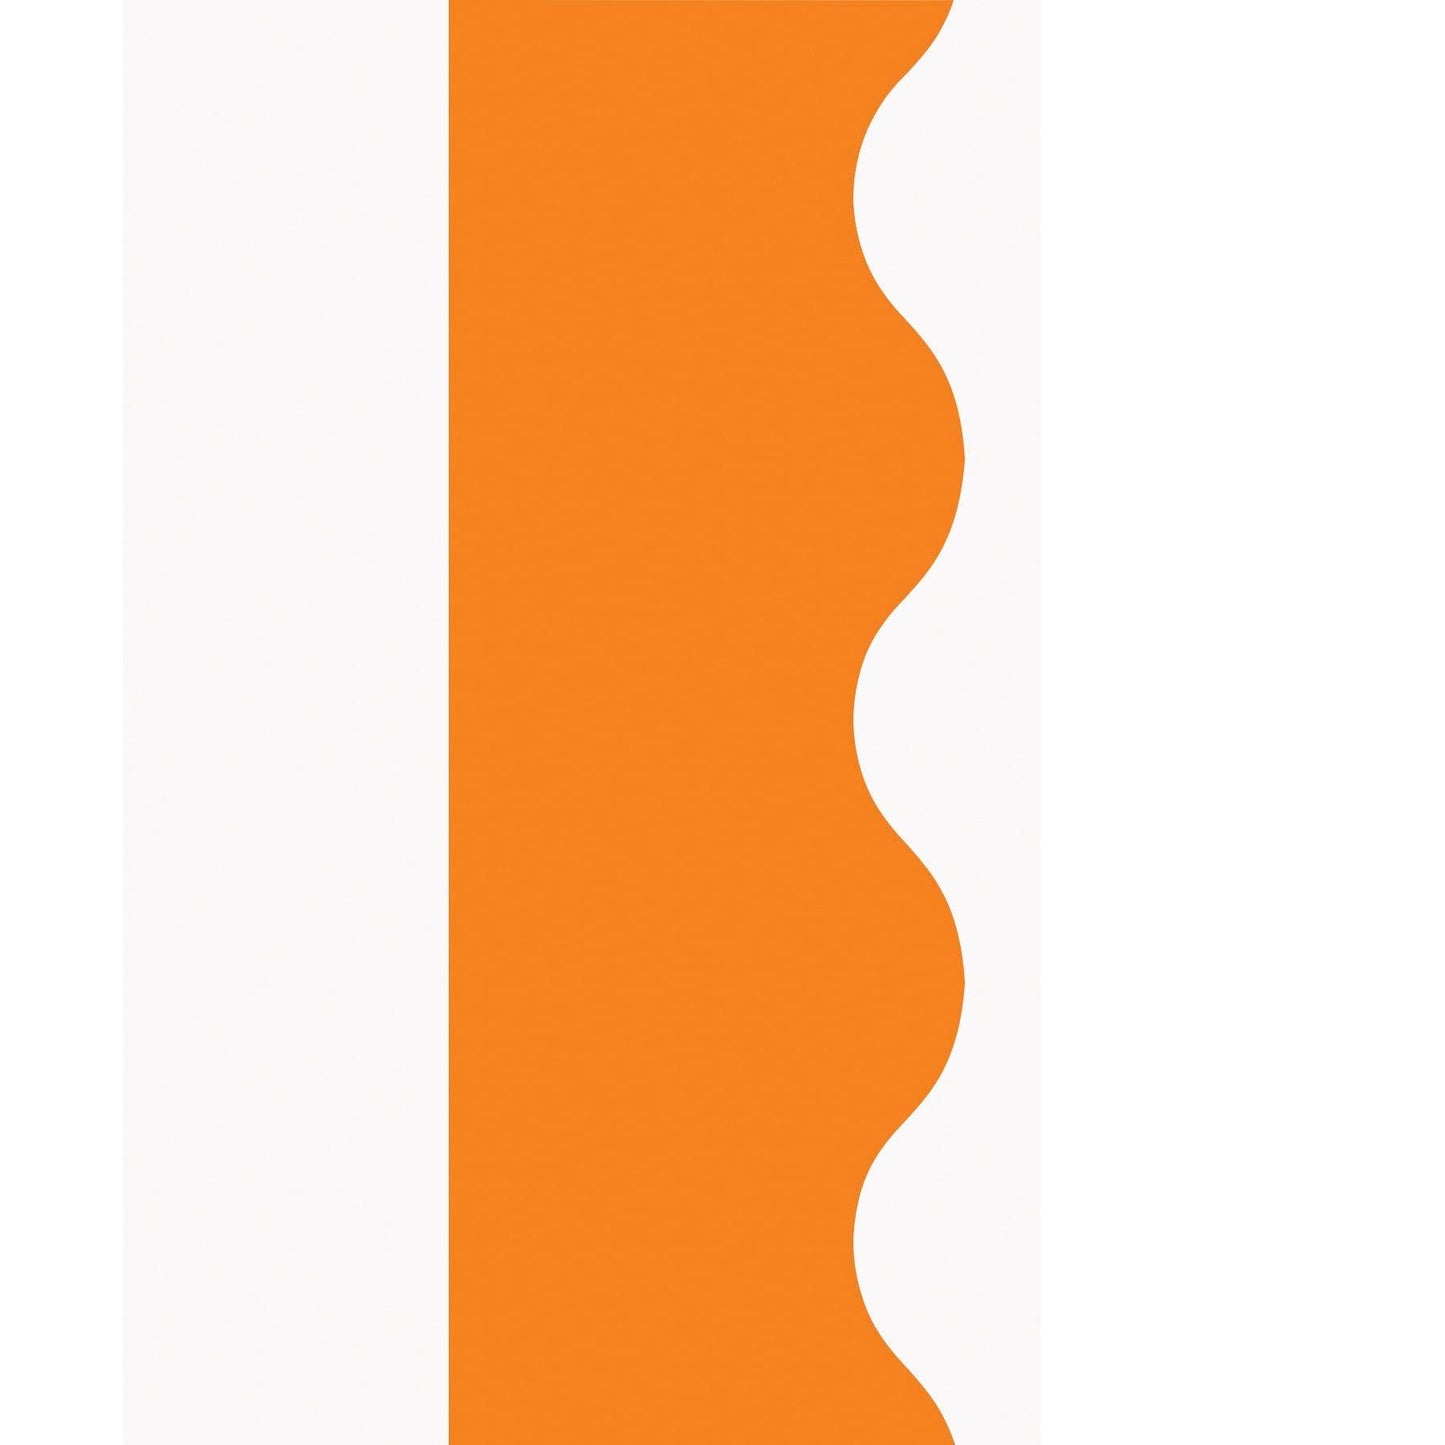 Orange Terrific Trimmers®, 39 Feet Per Pack, 6 Packs - Loomini